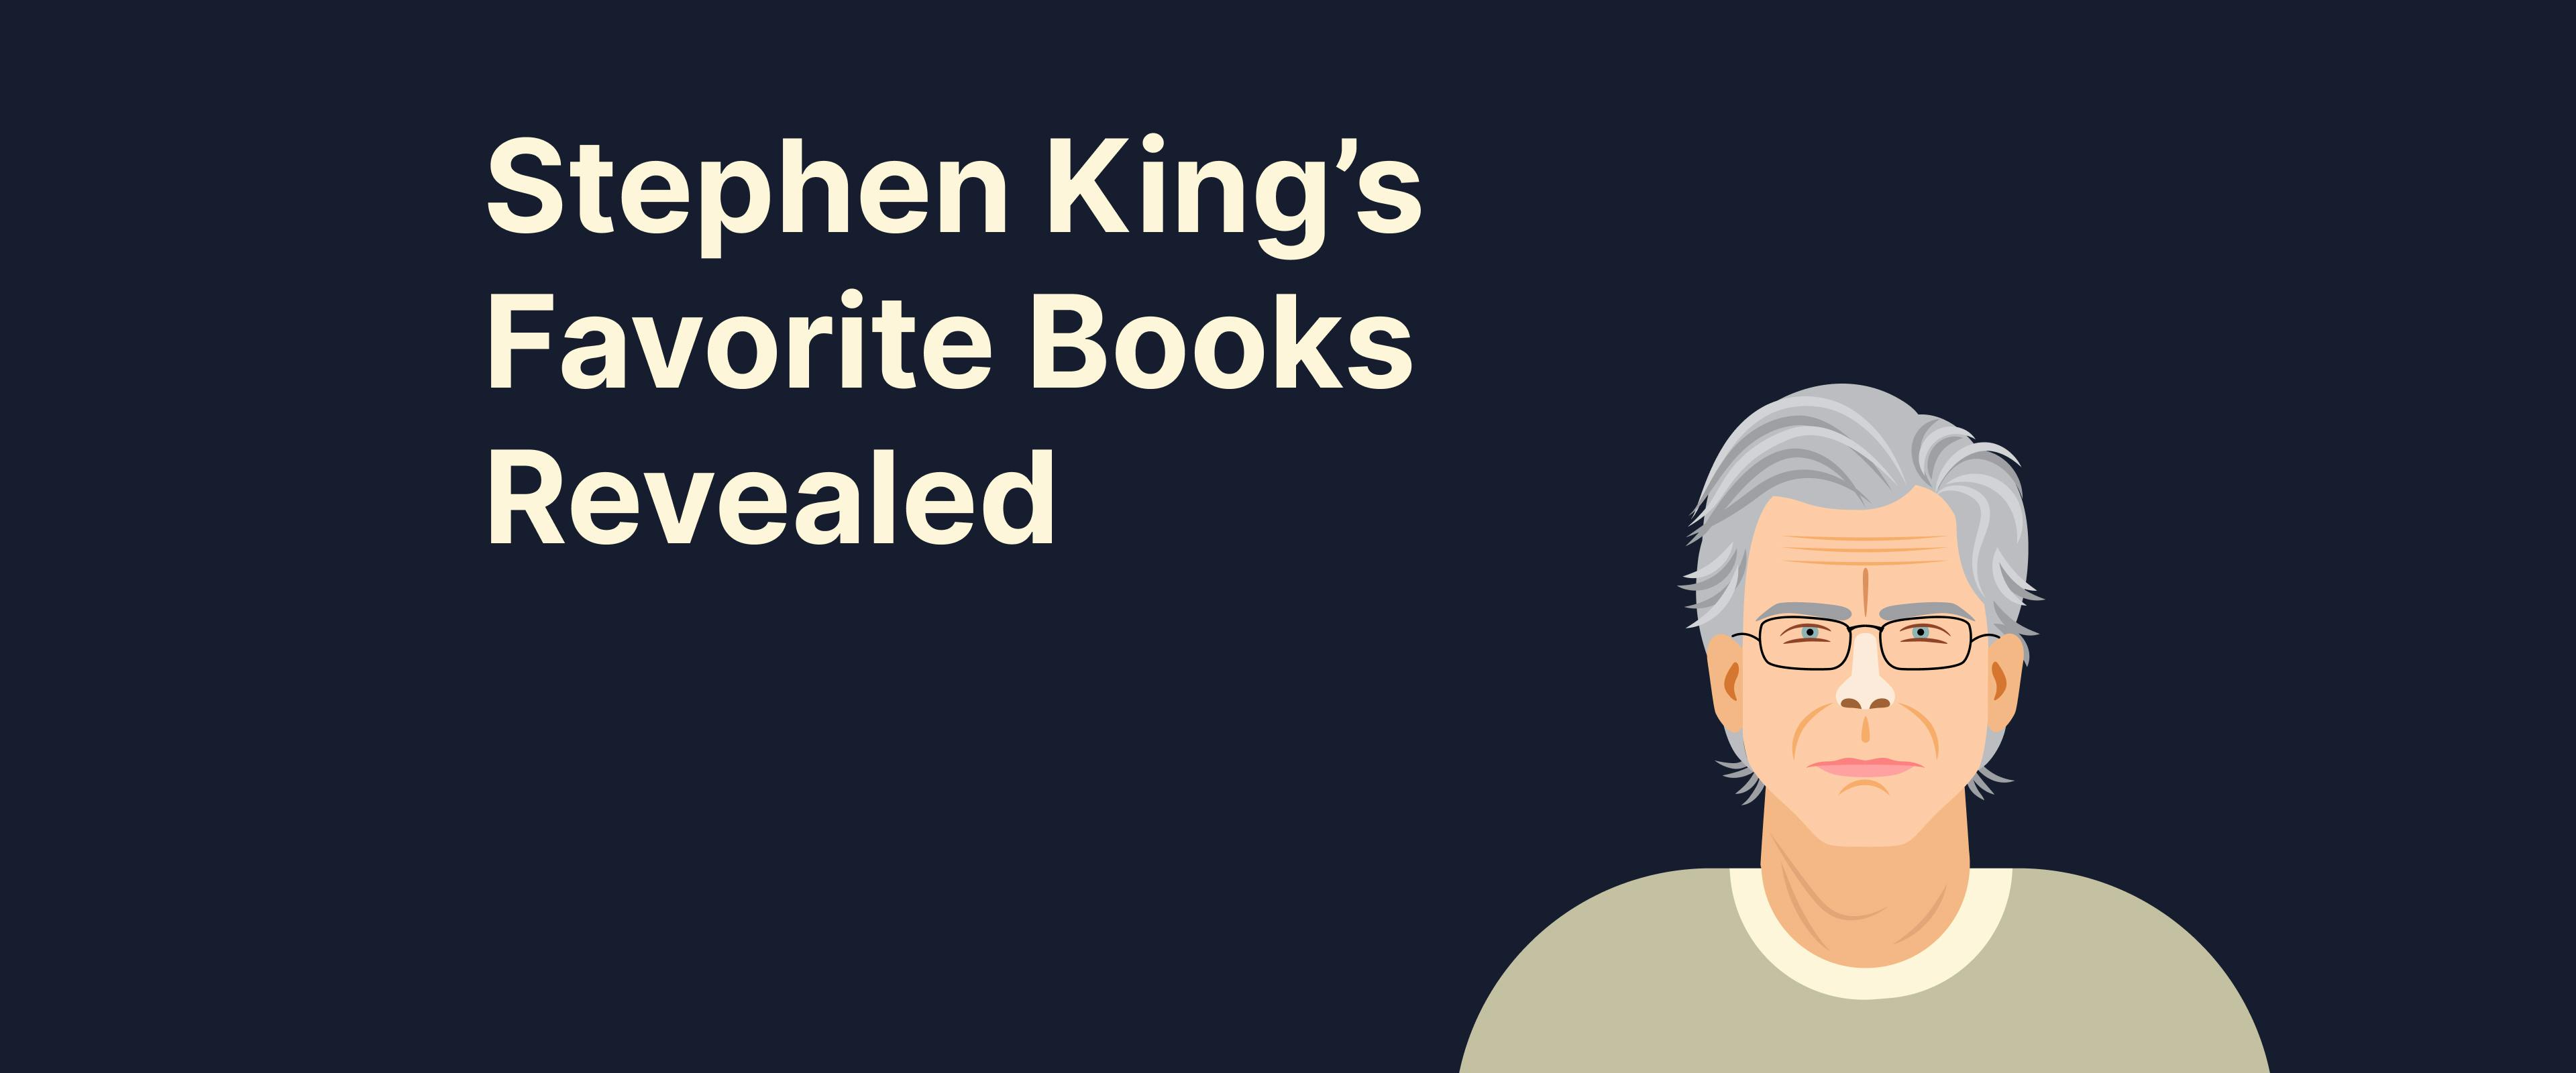 Stephen King’s Favorite Books Revealed - Headway App